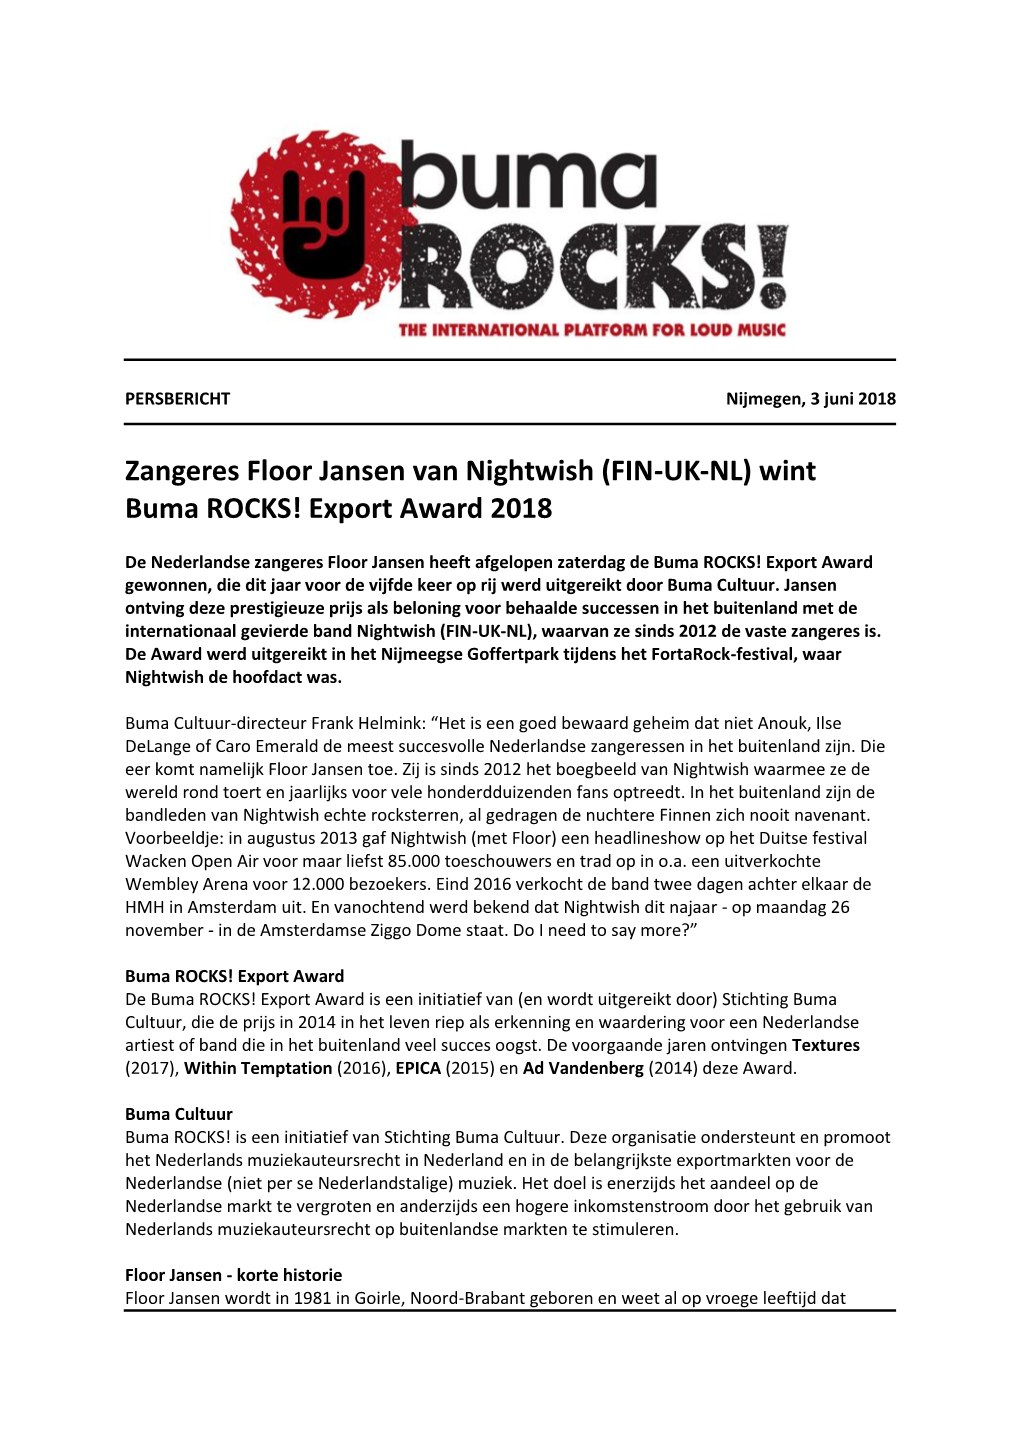 Zangeres Floor Jansen Van Nightwish (FIN-UK-NL) Wint Buma ROCKS! Export Award 2018